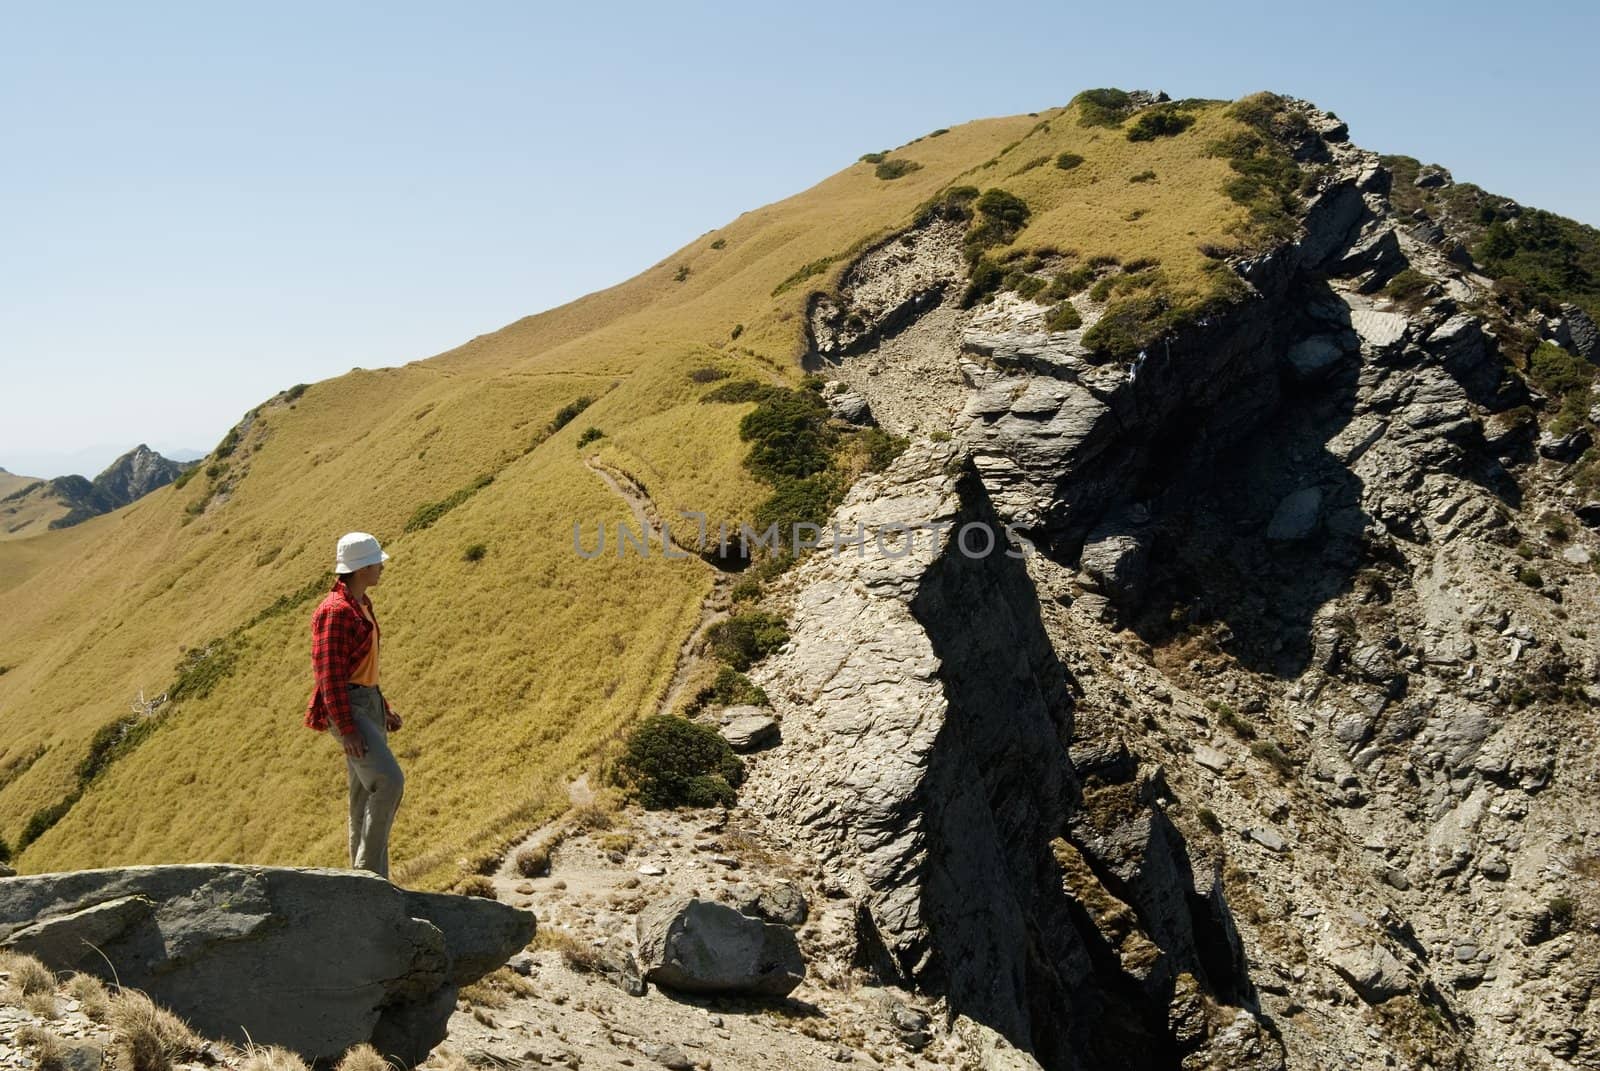 A man watch dangerous rocky ravine in the high mountain.